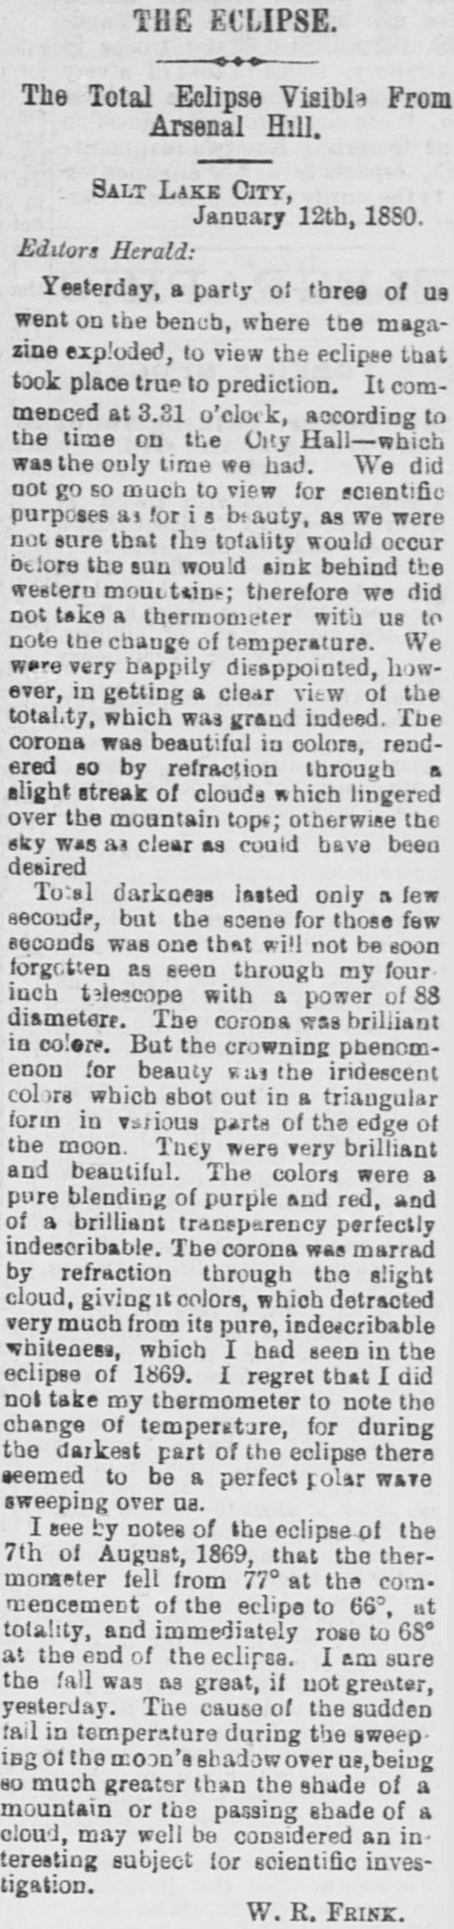 Salt Lake Daily Herald - January 13, 1880